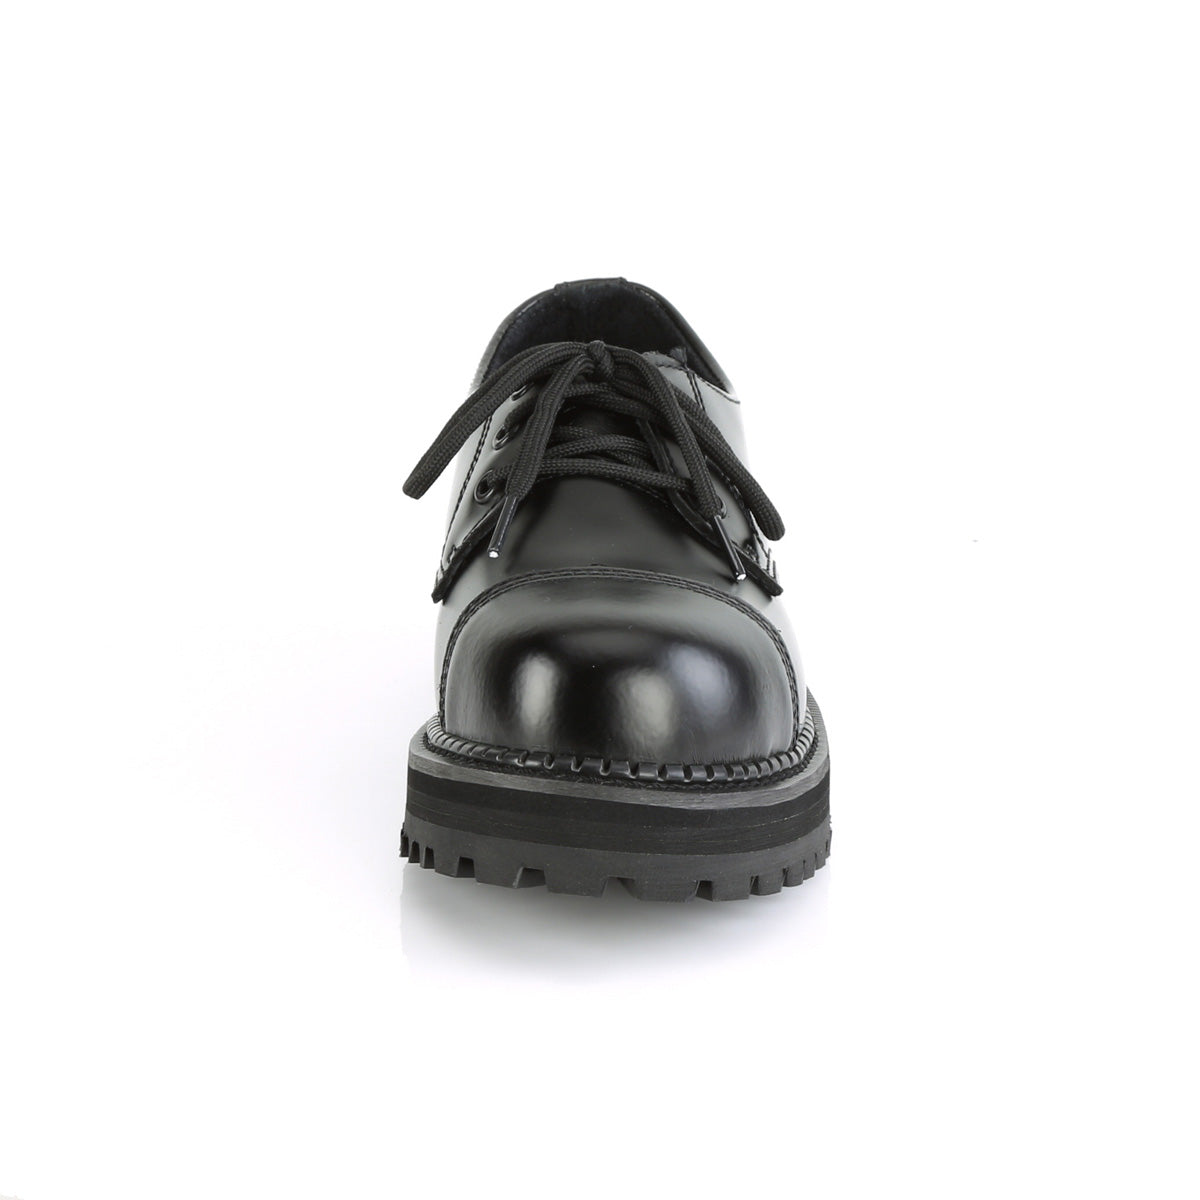 RIOT-03 Black Leather Shoe Demonia